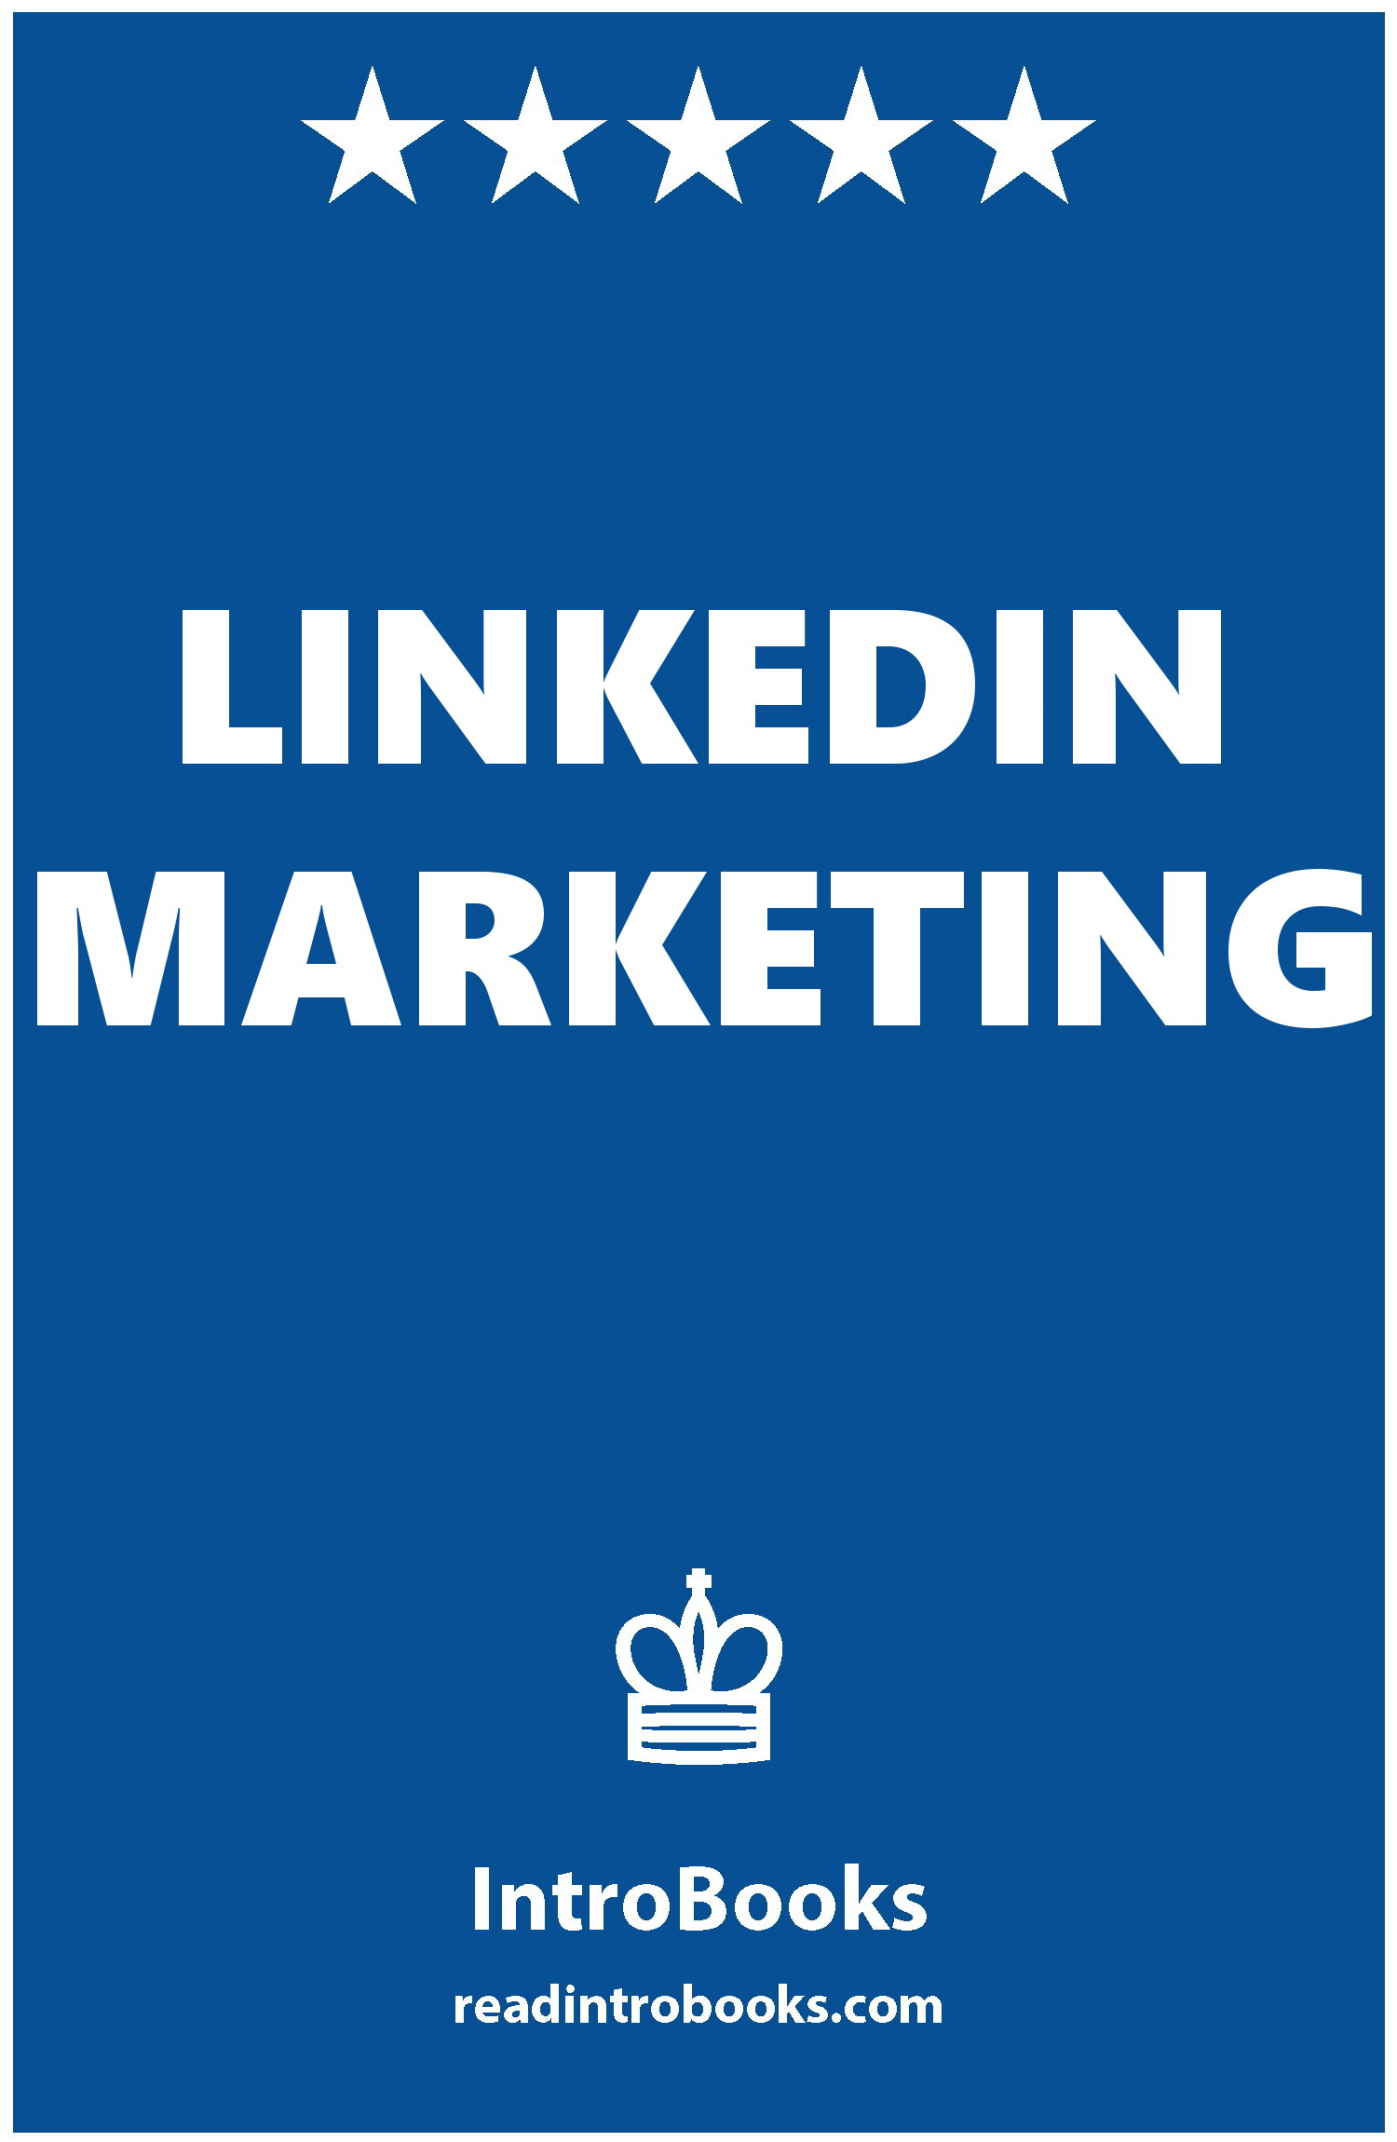 LinkedIn Marketing – Print Book, eBook, Audio Book – $3.99 – IntroBooks ...